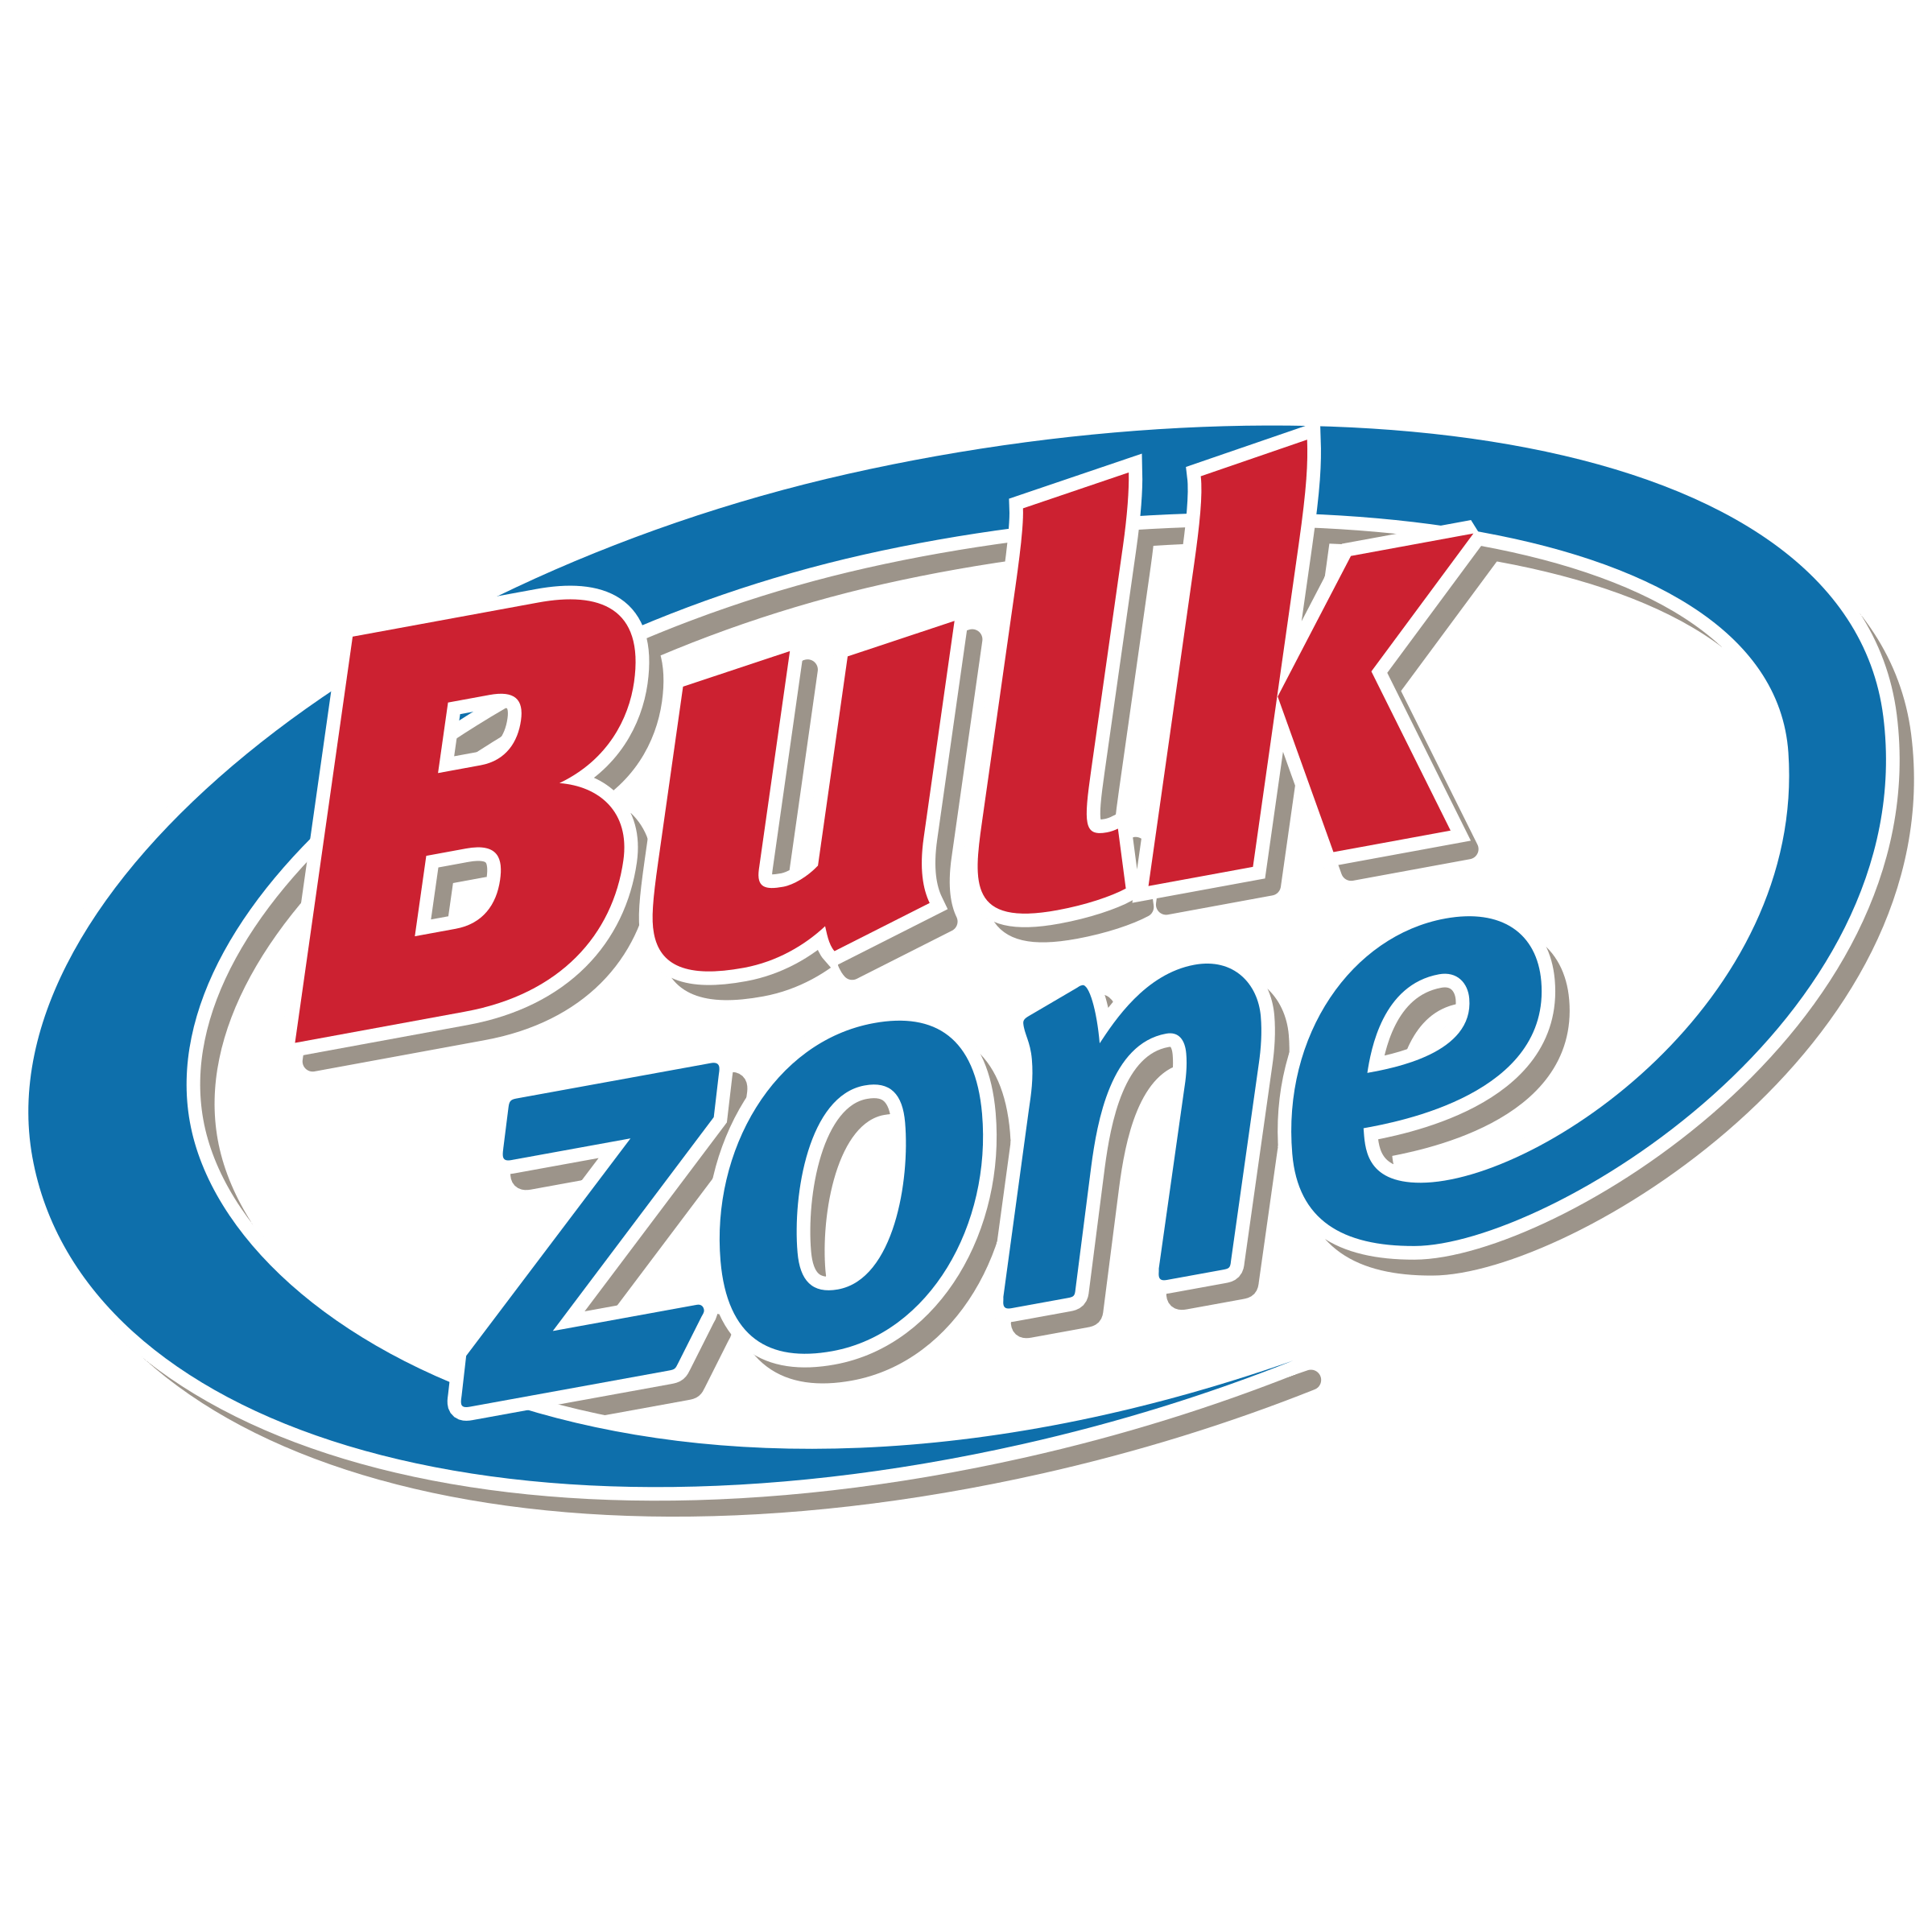 Bulk Logo - Bulk Zone 01 Logo PNG Transparent & SVG Vector